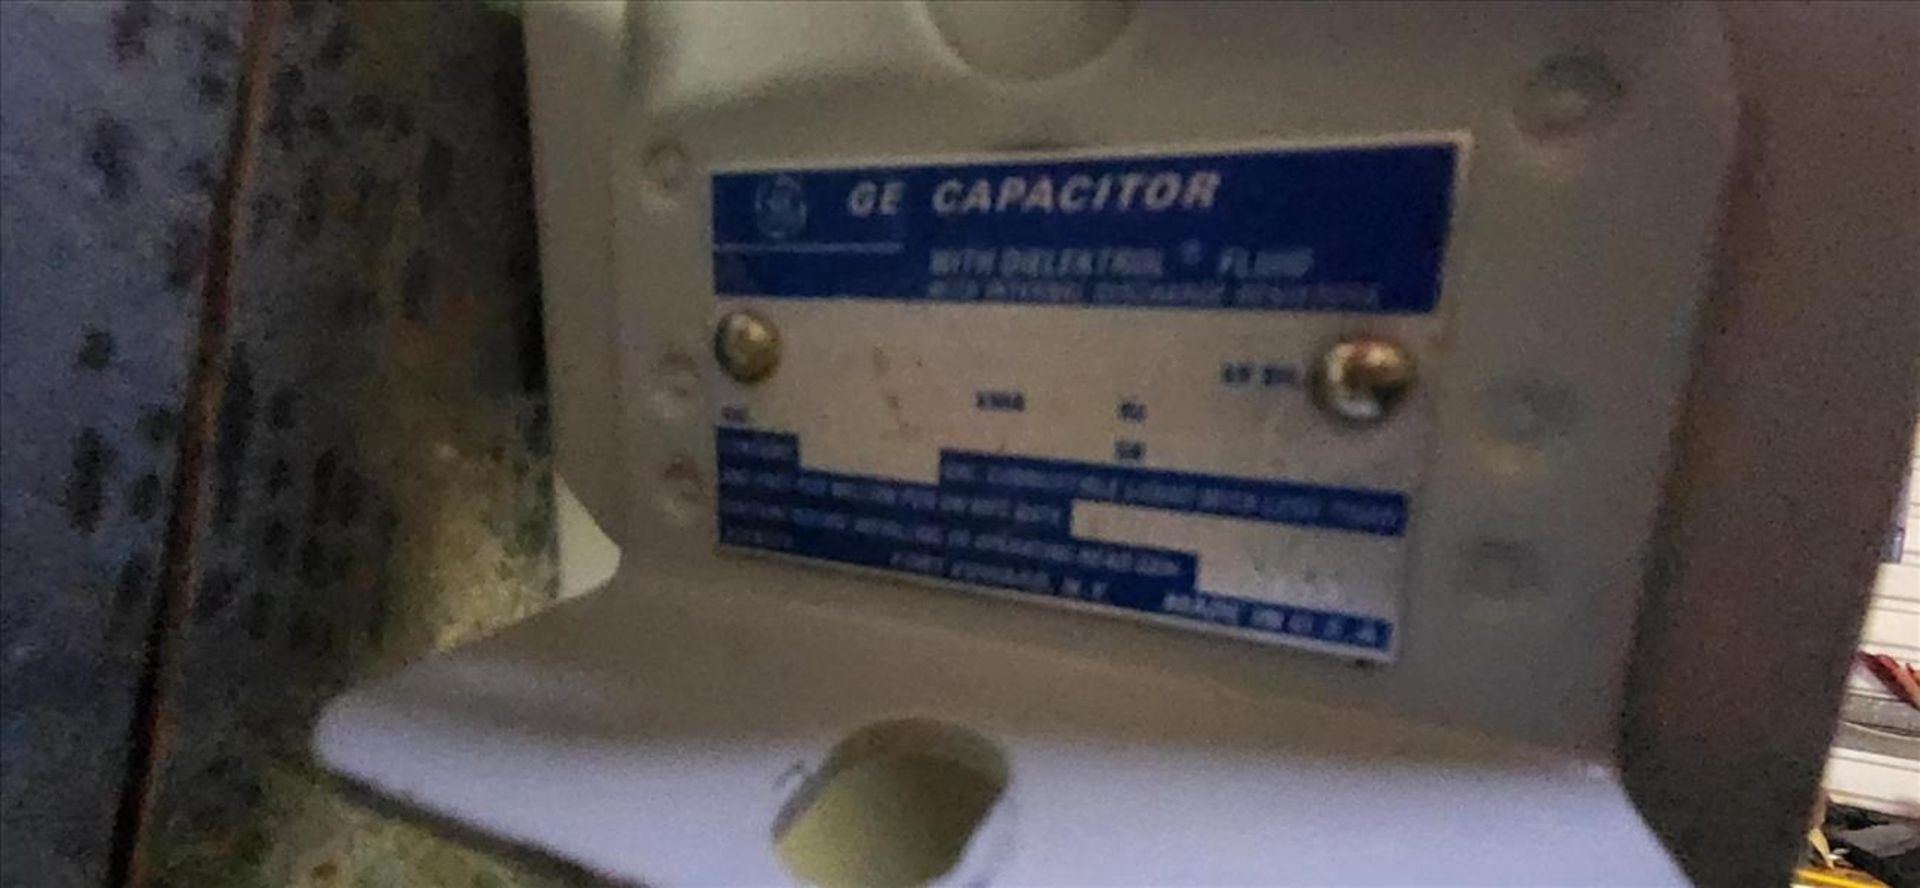 (6) GE capacitors w/ liquid Dieletrol VII (Asset Location: Hallnor Yard) {Day 1} [TAG 1481 / LOC - Image 2 of 3